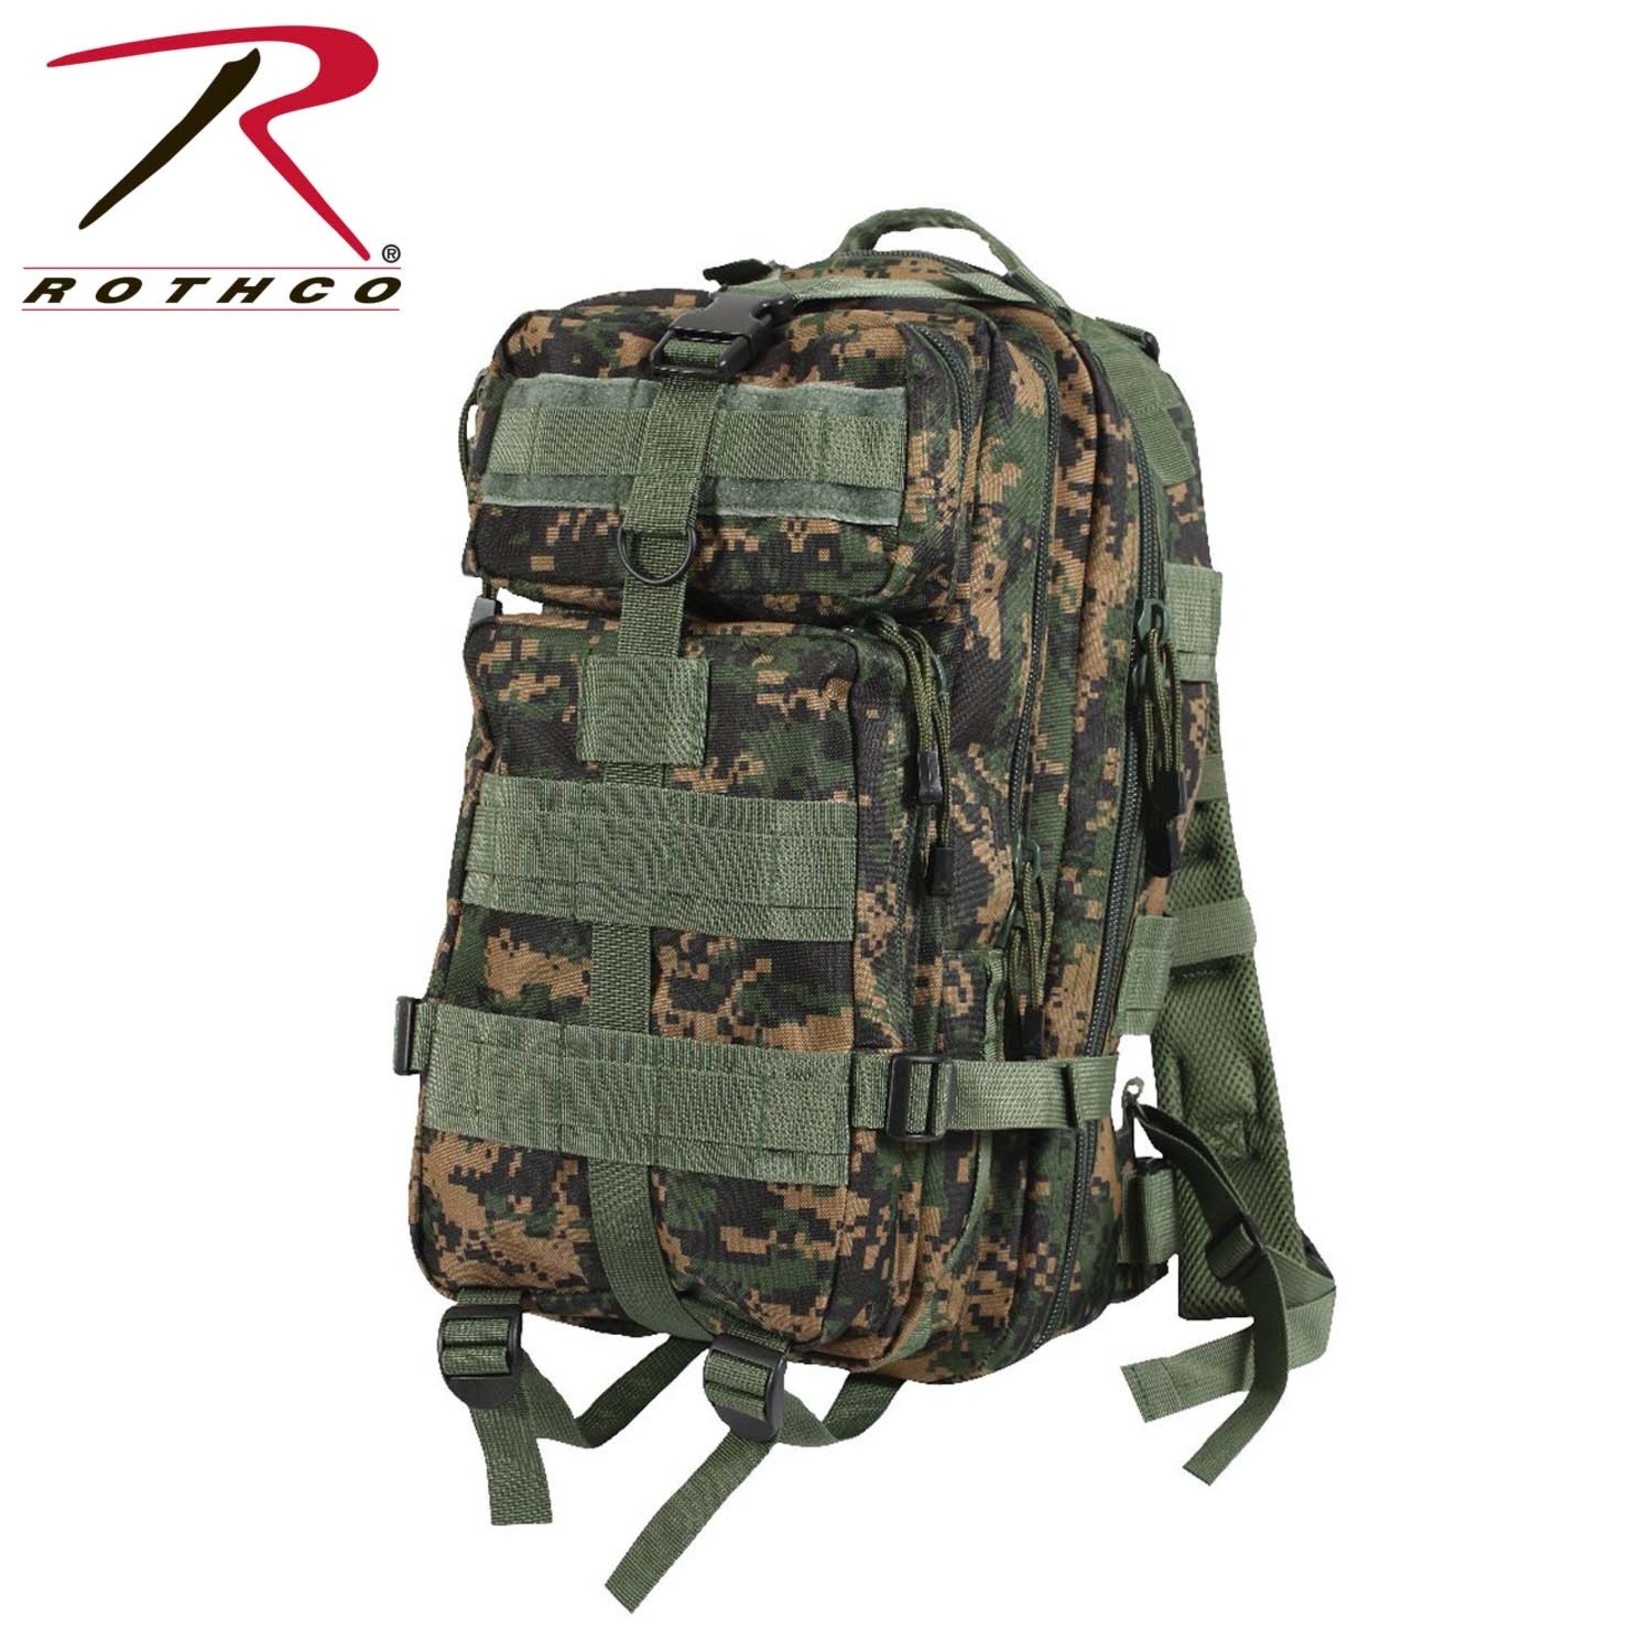 Rothco Rothco Camo Medium Transport Backpack